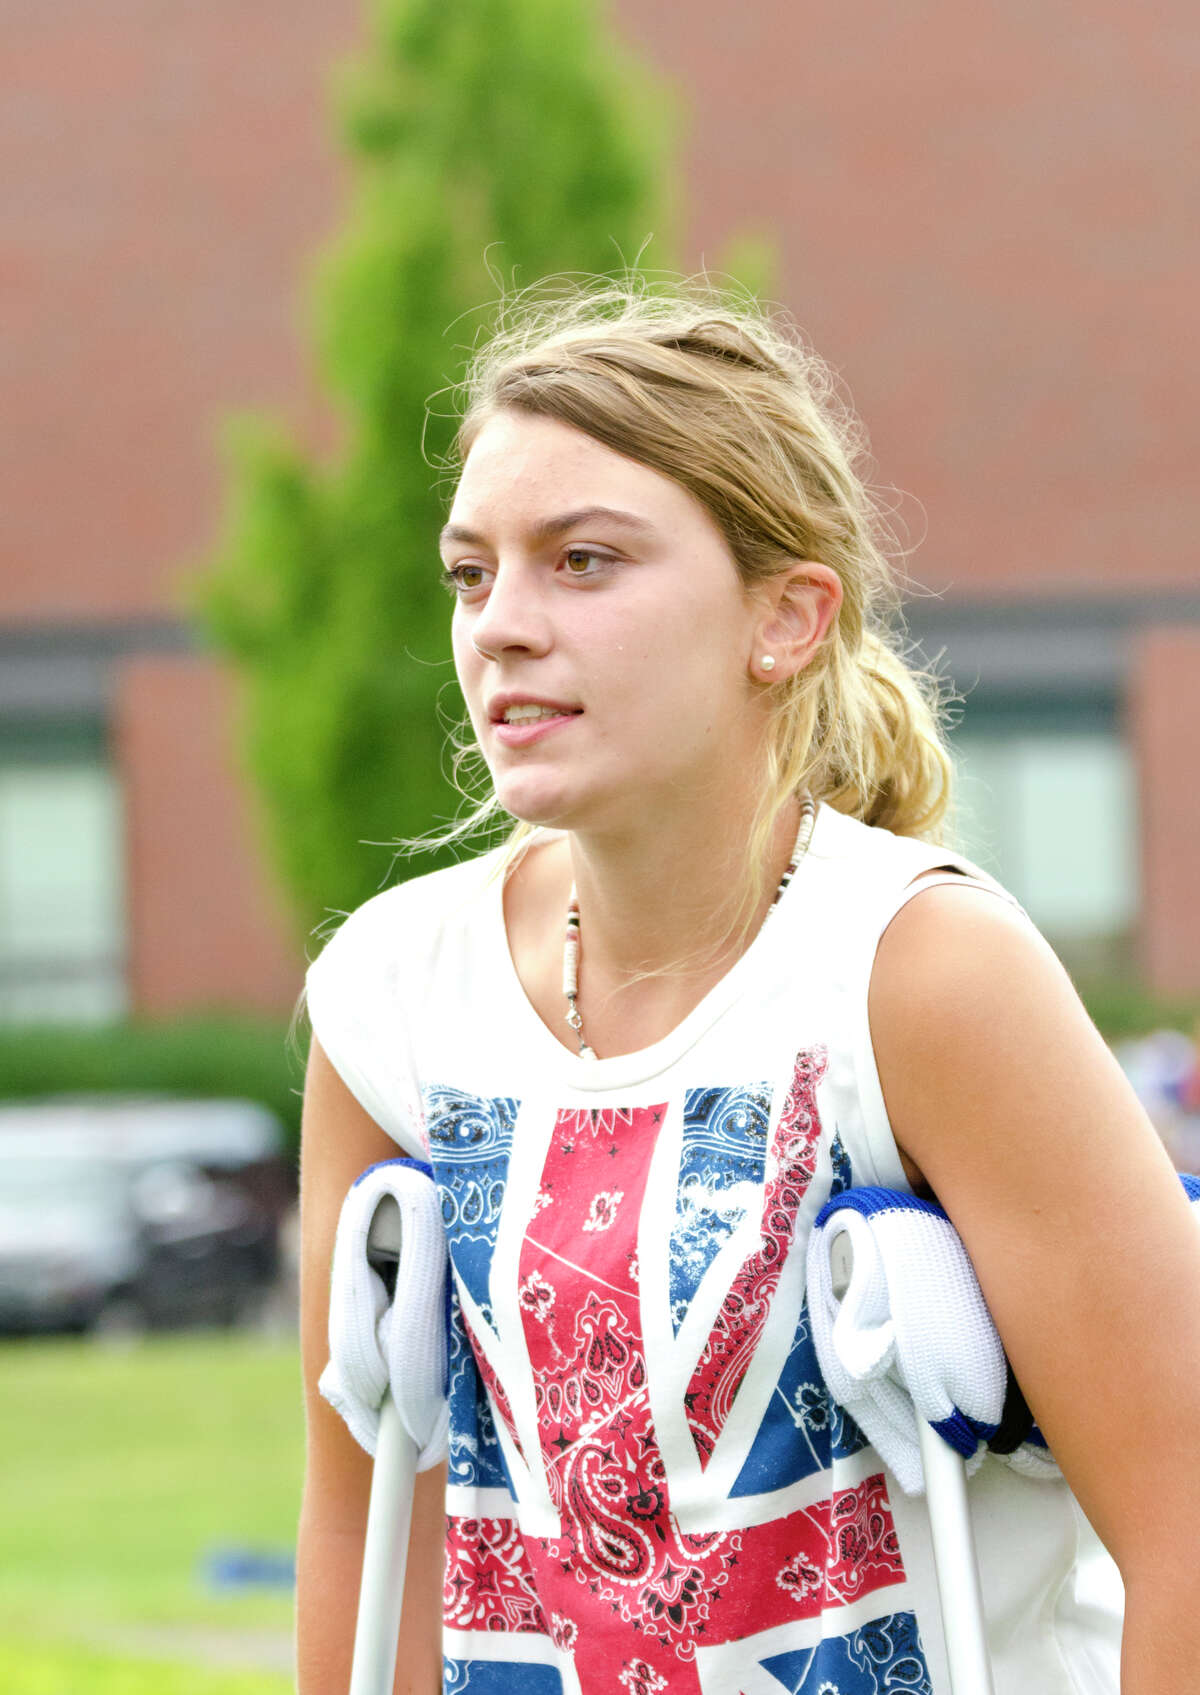 Julia Black, co-captain of the Darien High School girls soccer team, during practice at Darien High School on Wednesday, Aug. 28, 2013.